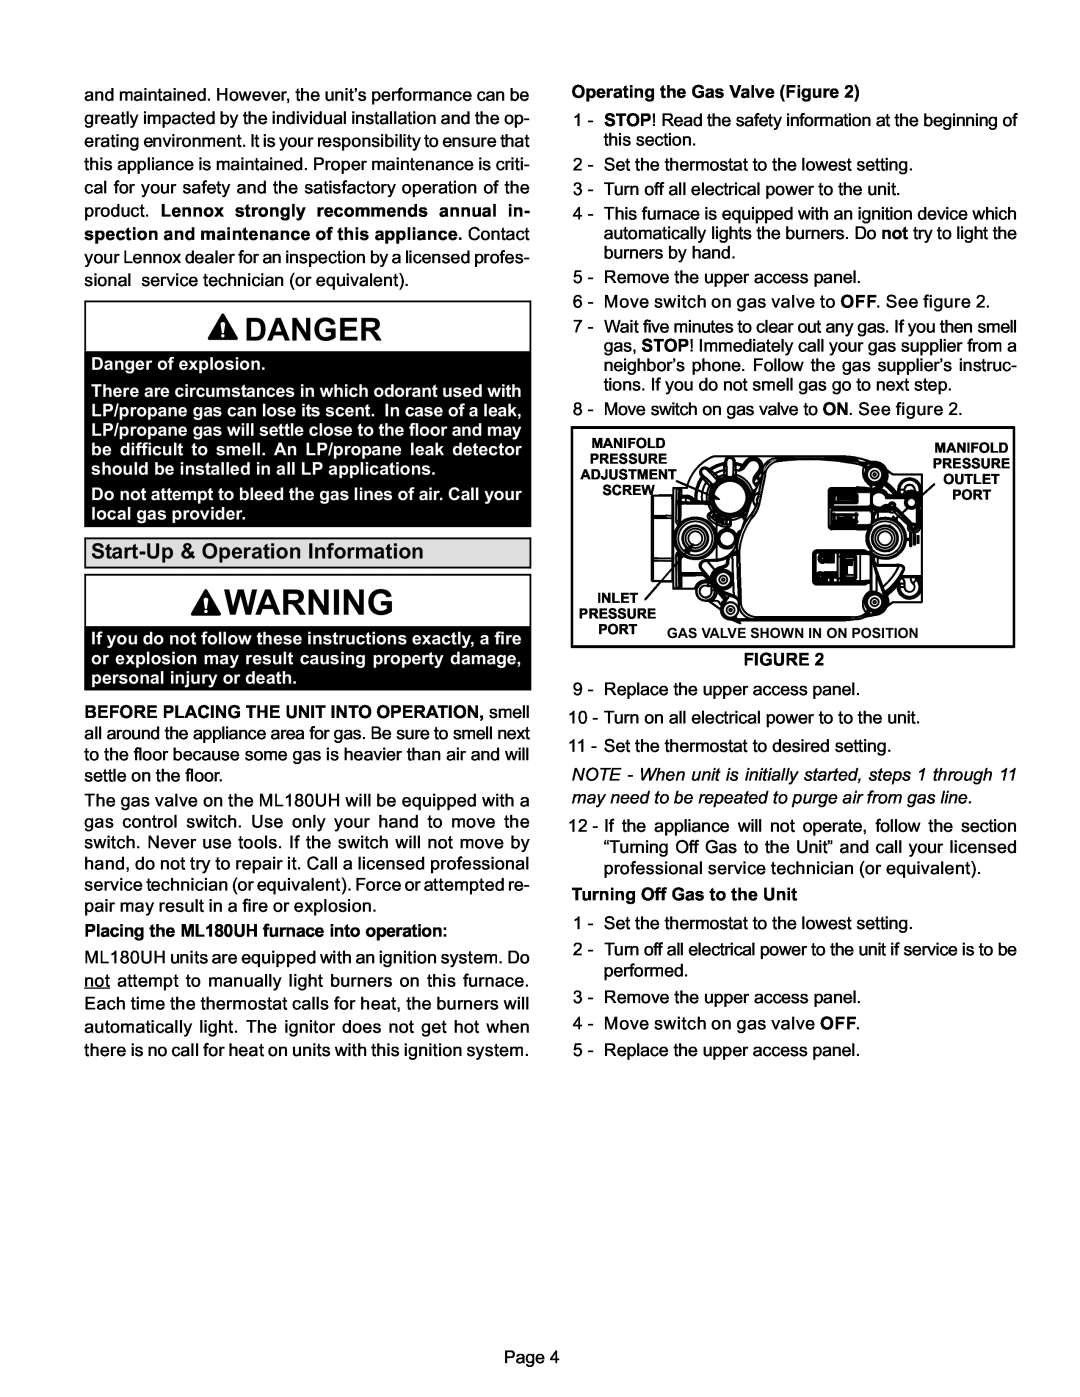 Lennox International Inc ML180UH, LENOX GAS FURNACE manual Danger, Start−Up & Operation Information 